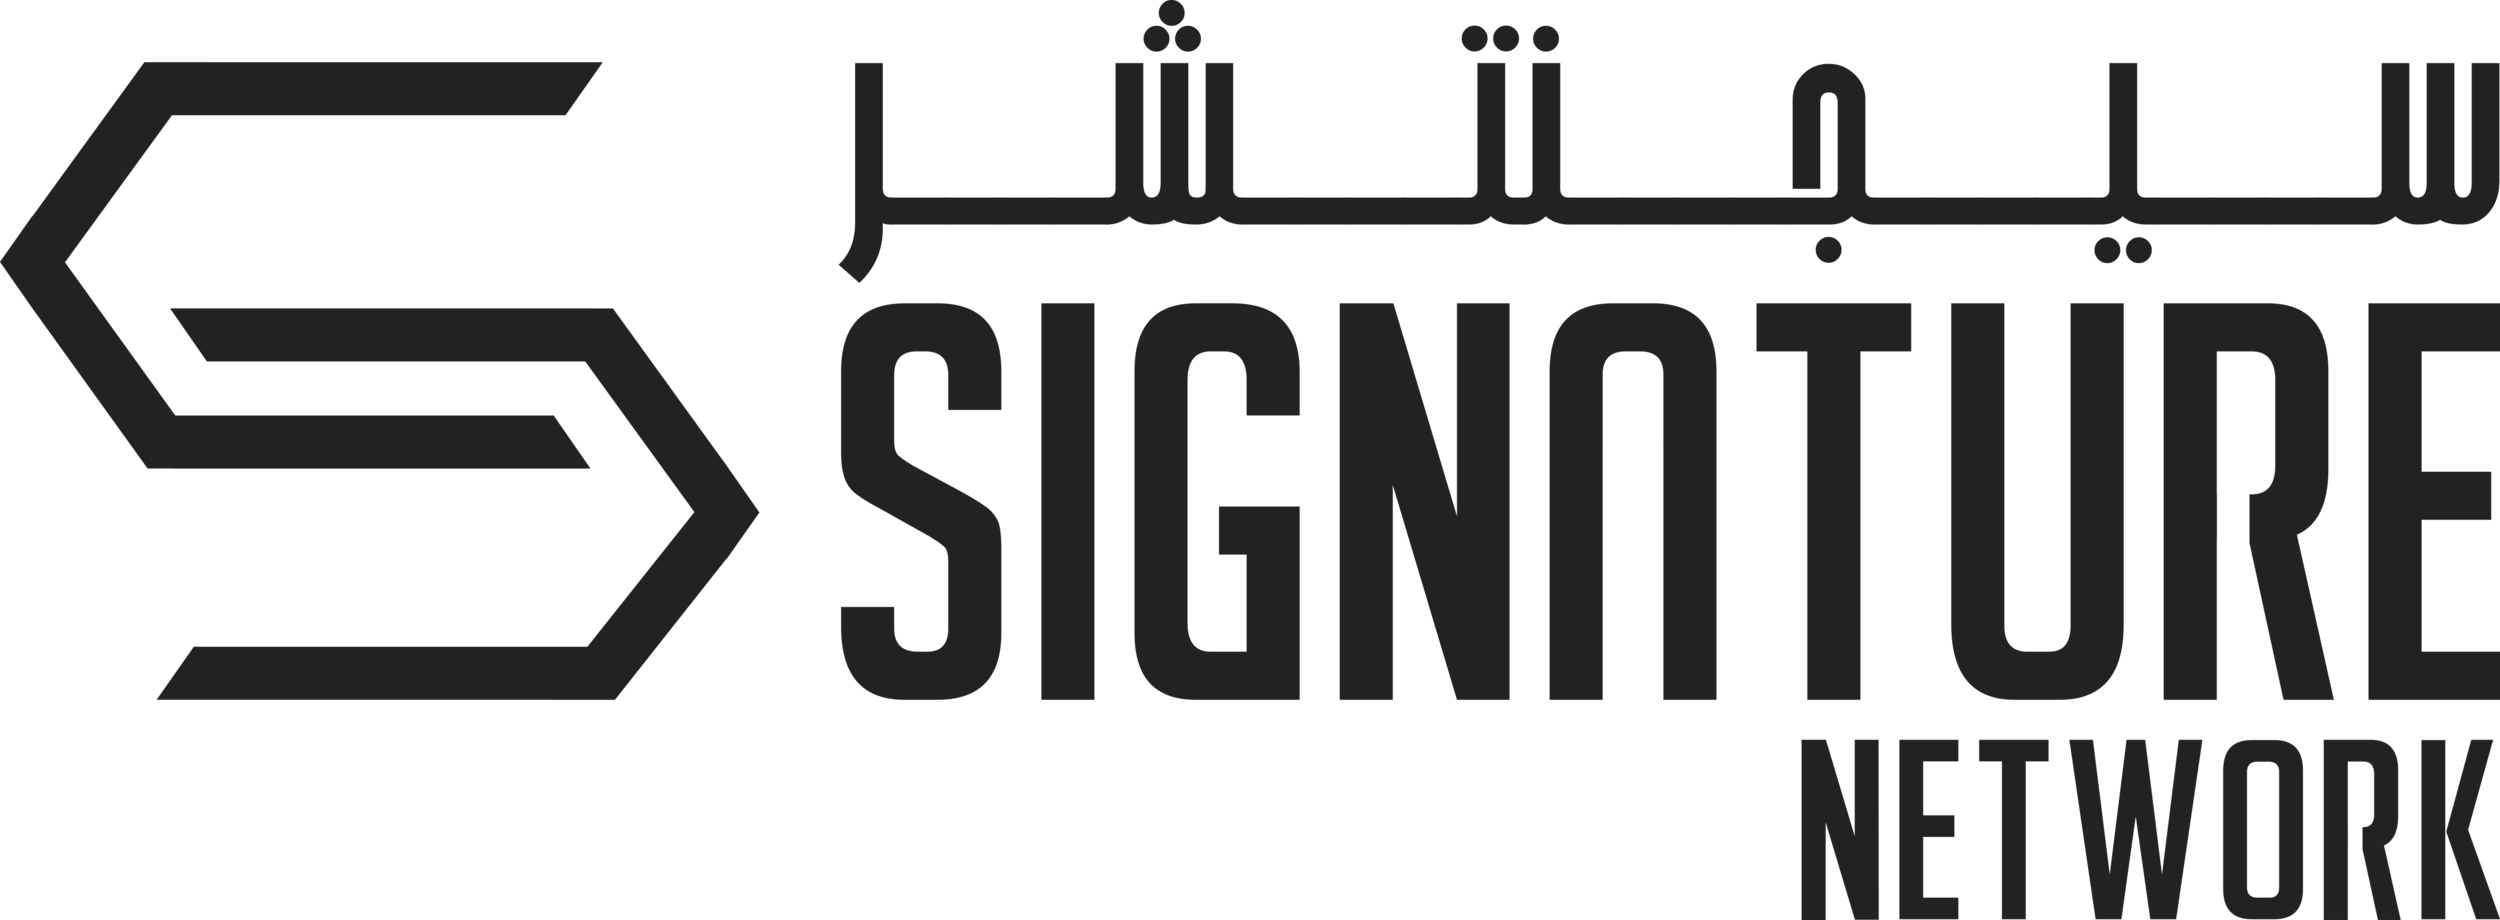 Signature NetWork Final Logo- Black (1) (1) (1).png